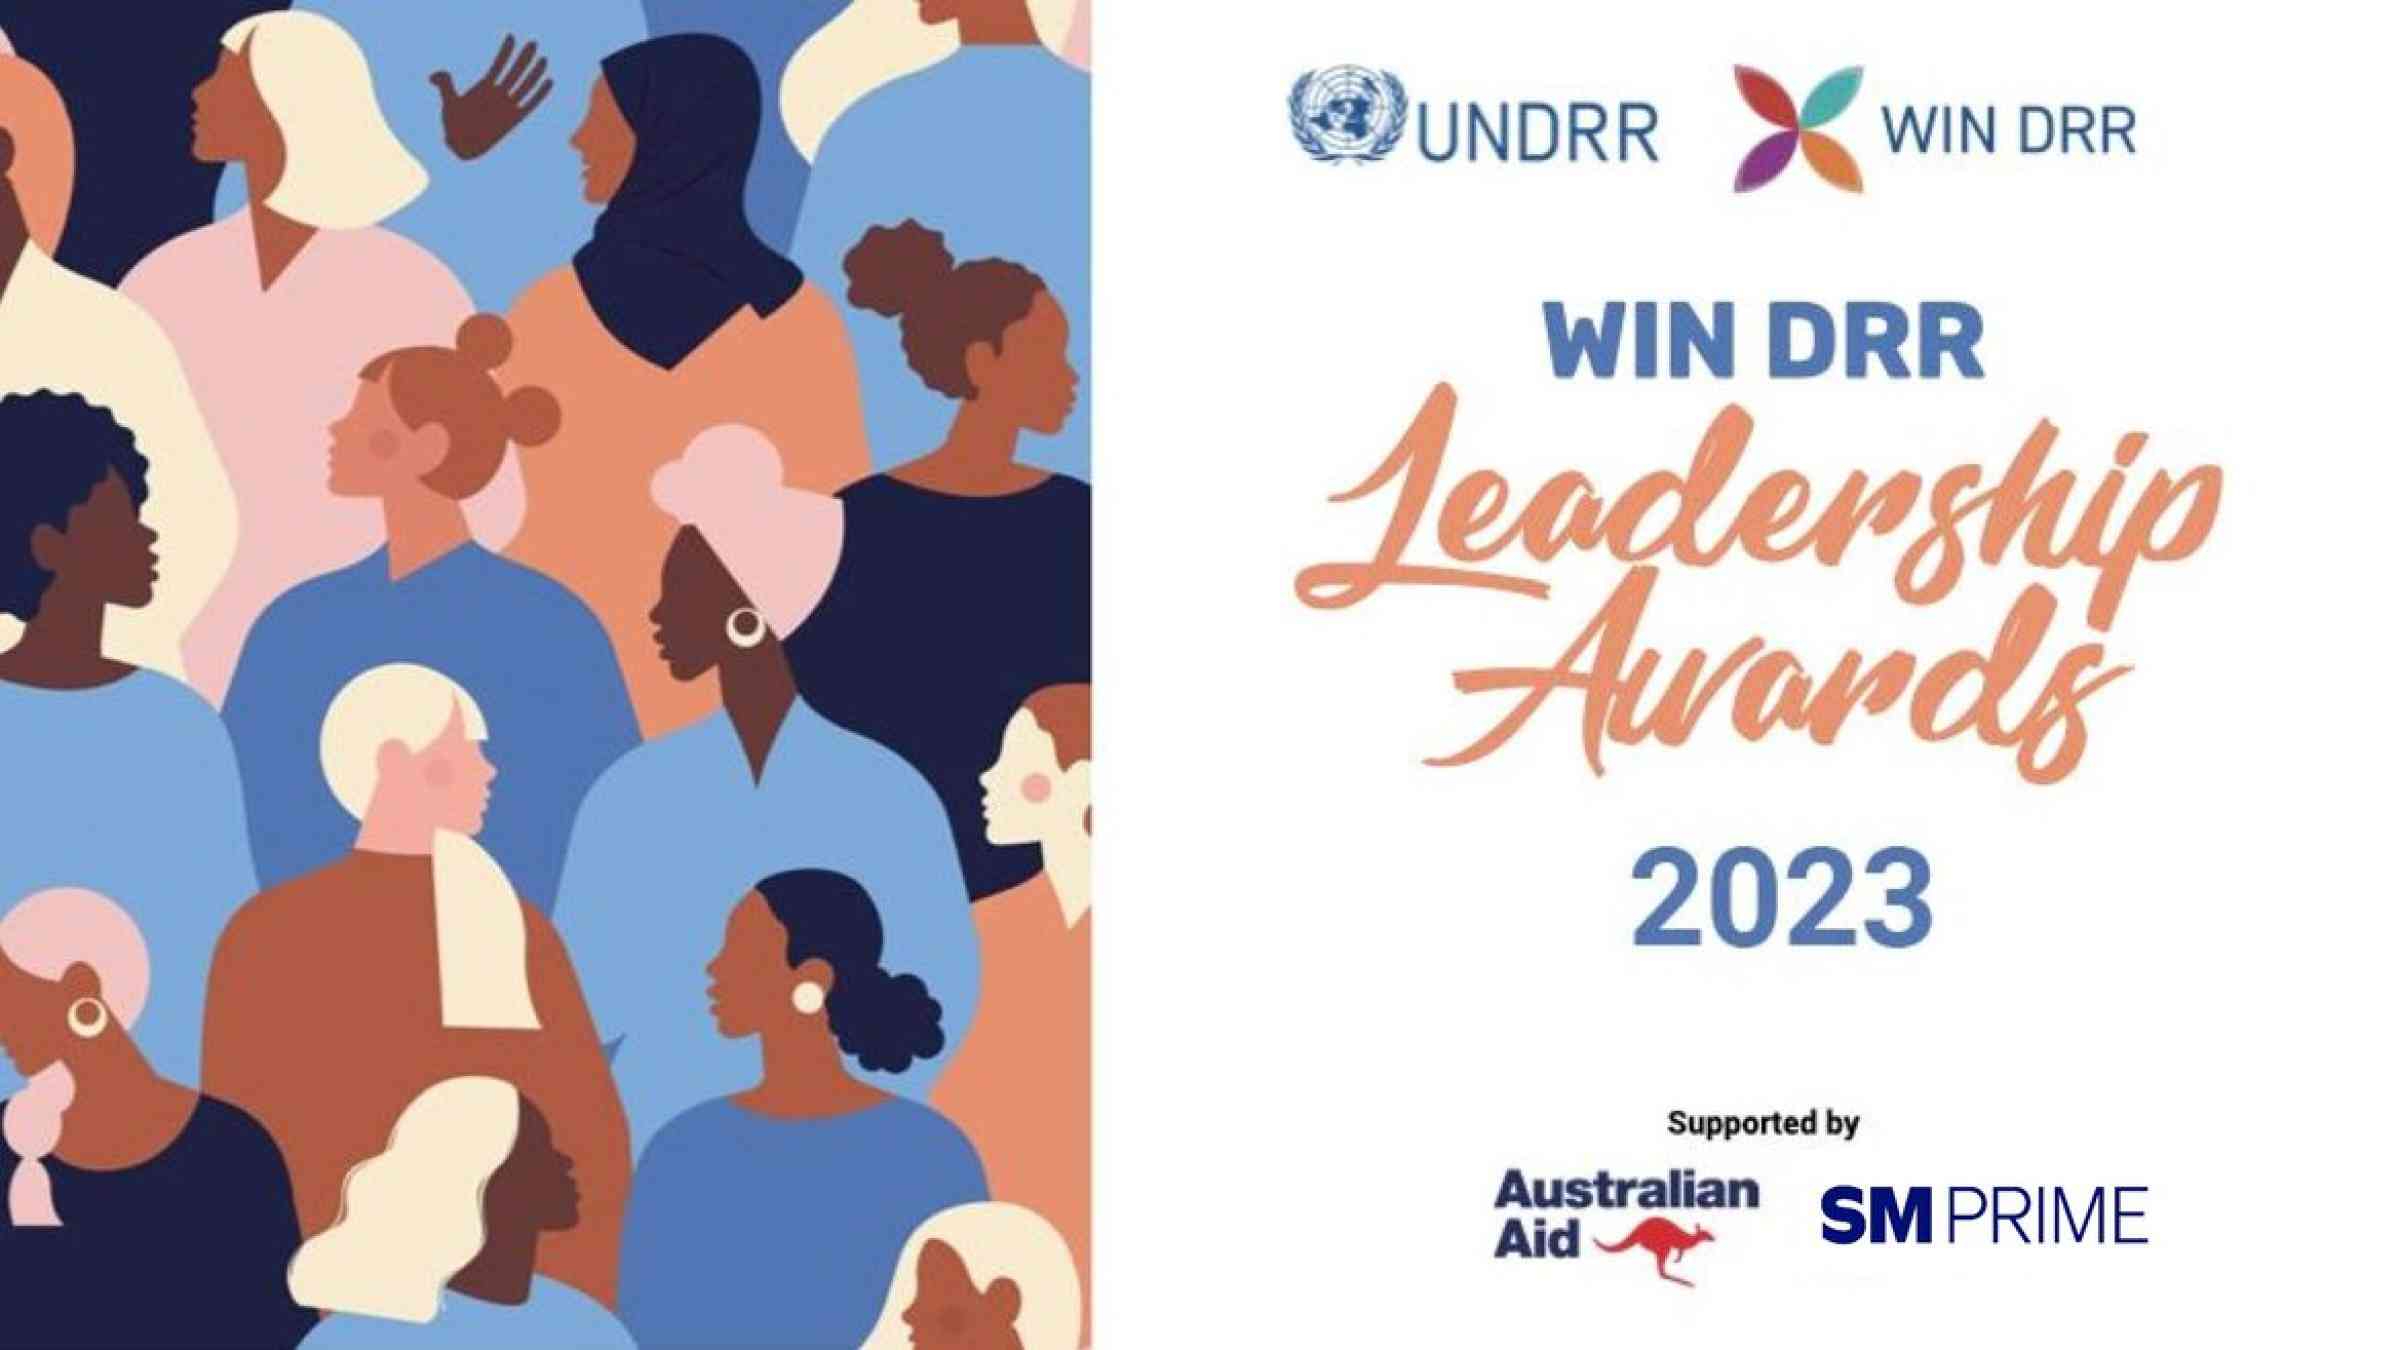 WIN DRR Leadership Awards 2023